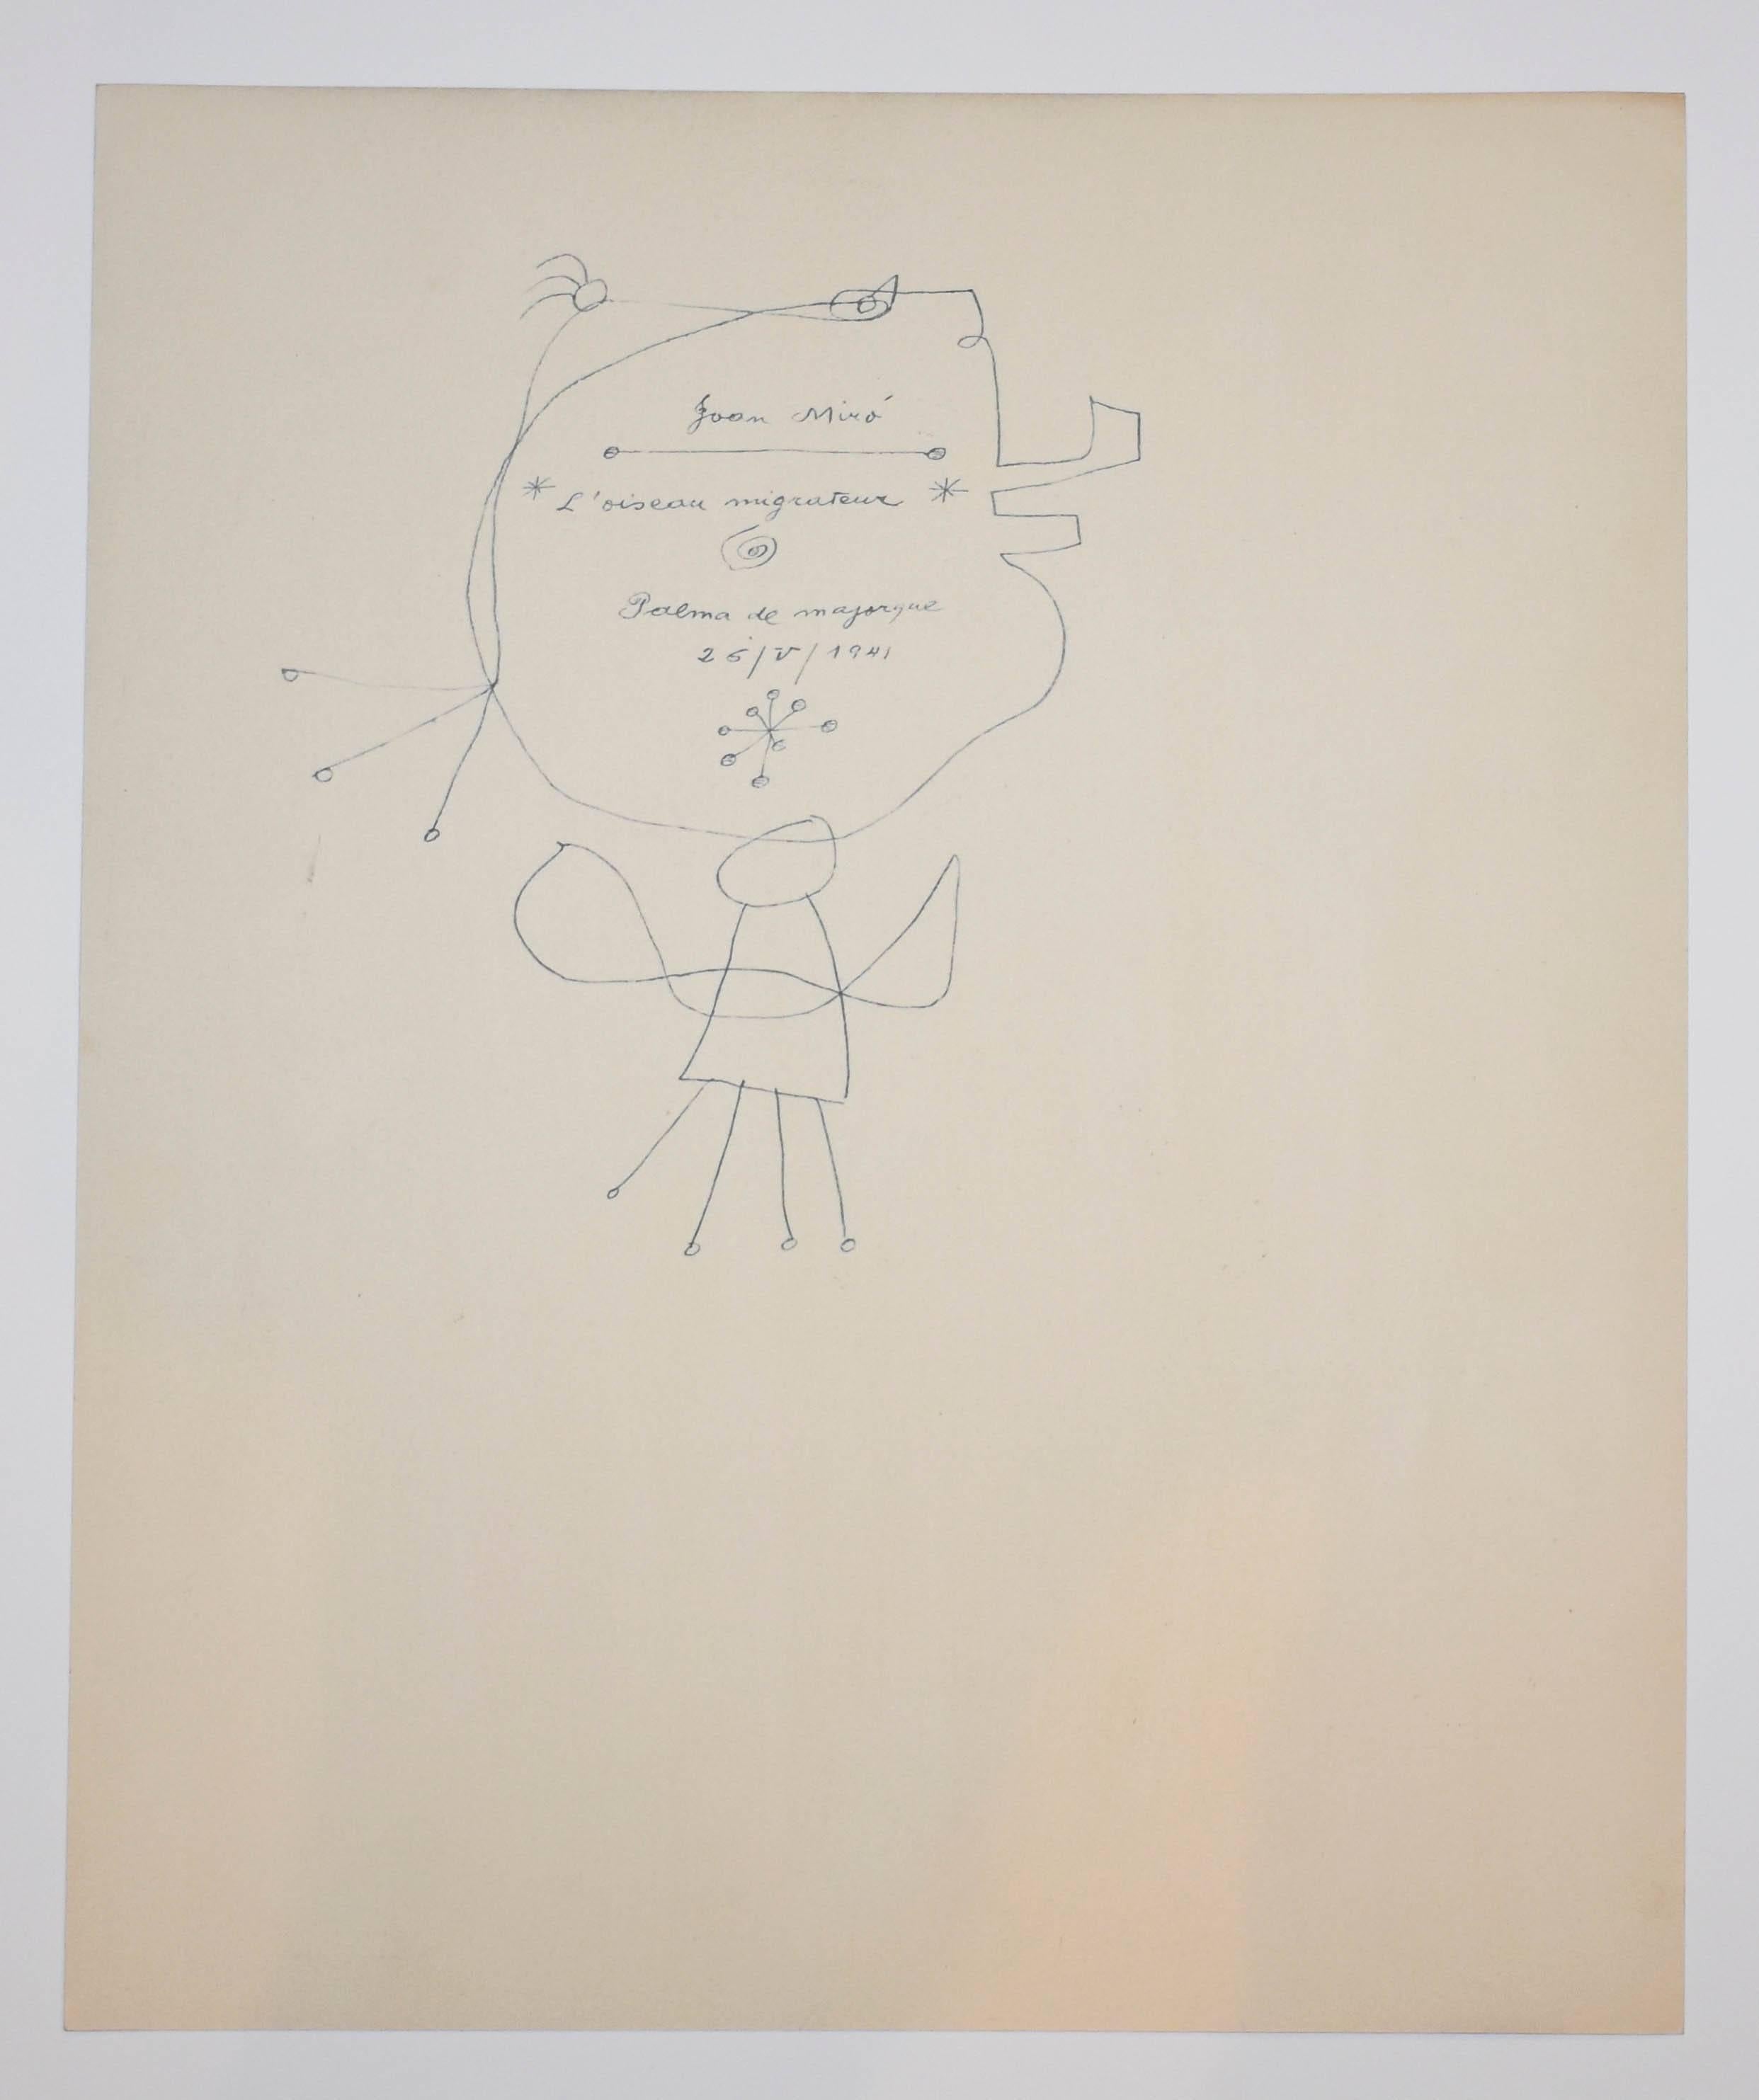 Artist: Joan Miro (after)
Medium: Pochoir
Title: L'oiseau migrateur (The Migratory Bird), Plate XVIII
Portfolio: Constellations: A Suite of Twenty-Two Pochoirs
Year: 1959
Edition: 104/350
Image Size: 14 x 17 inches (35.6 x 43.2 cm)
Sheet Size: 14 x